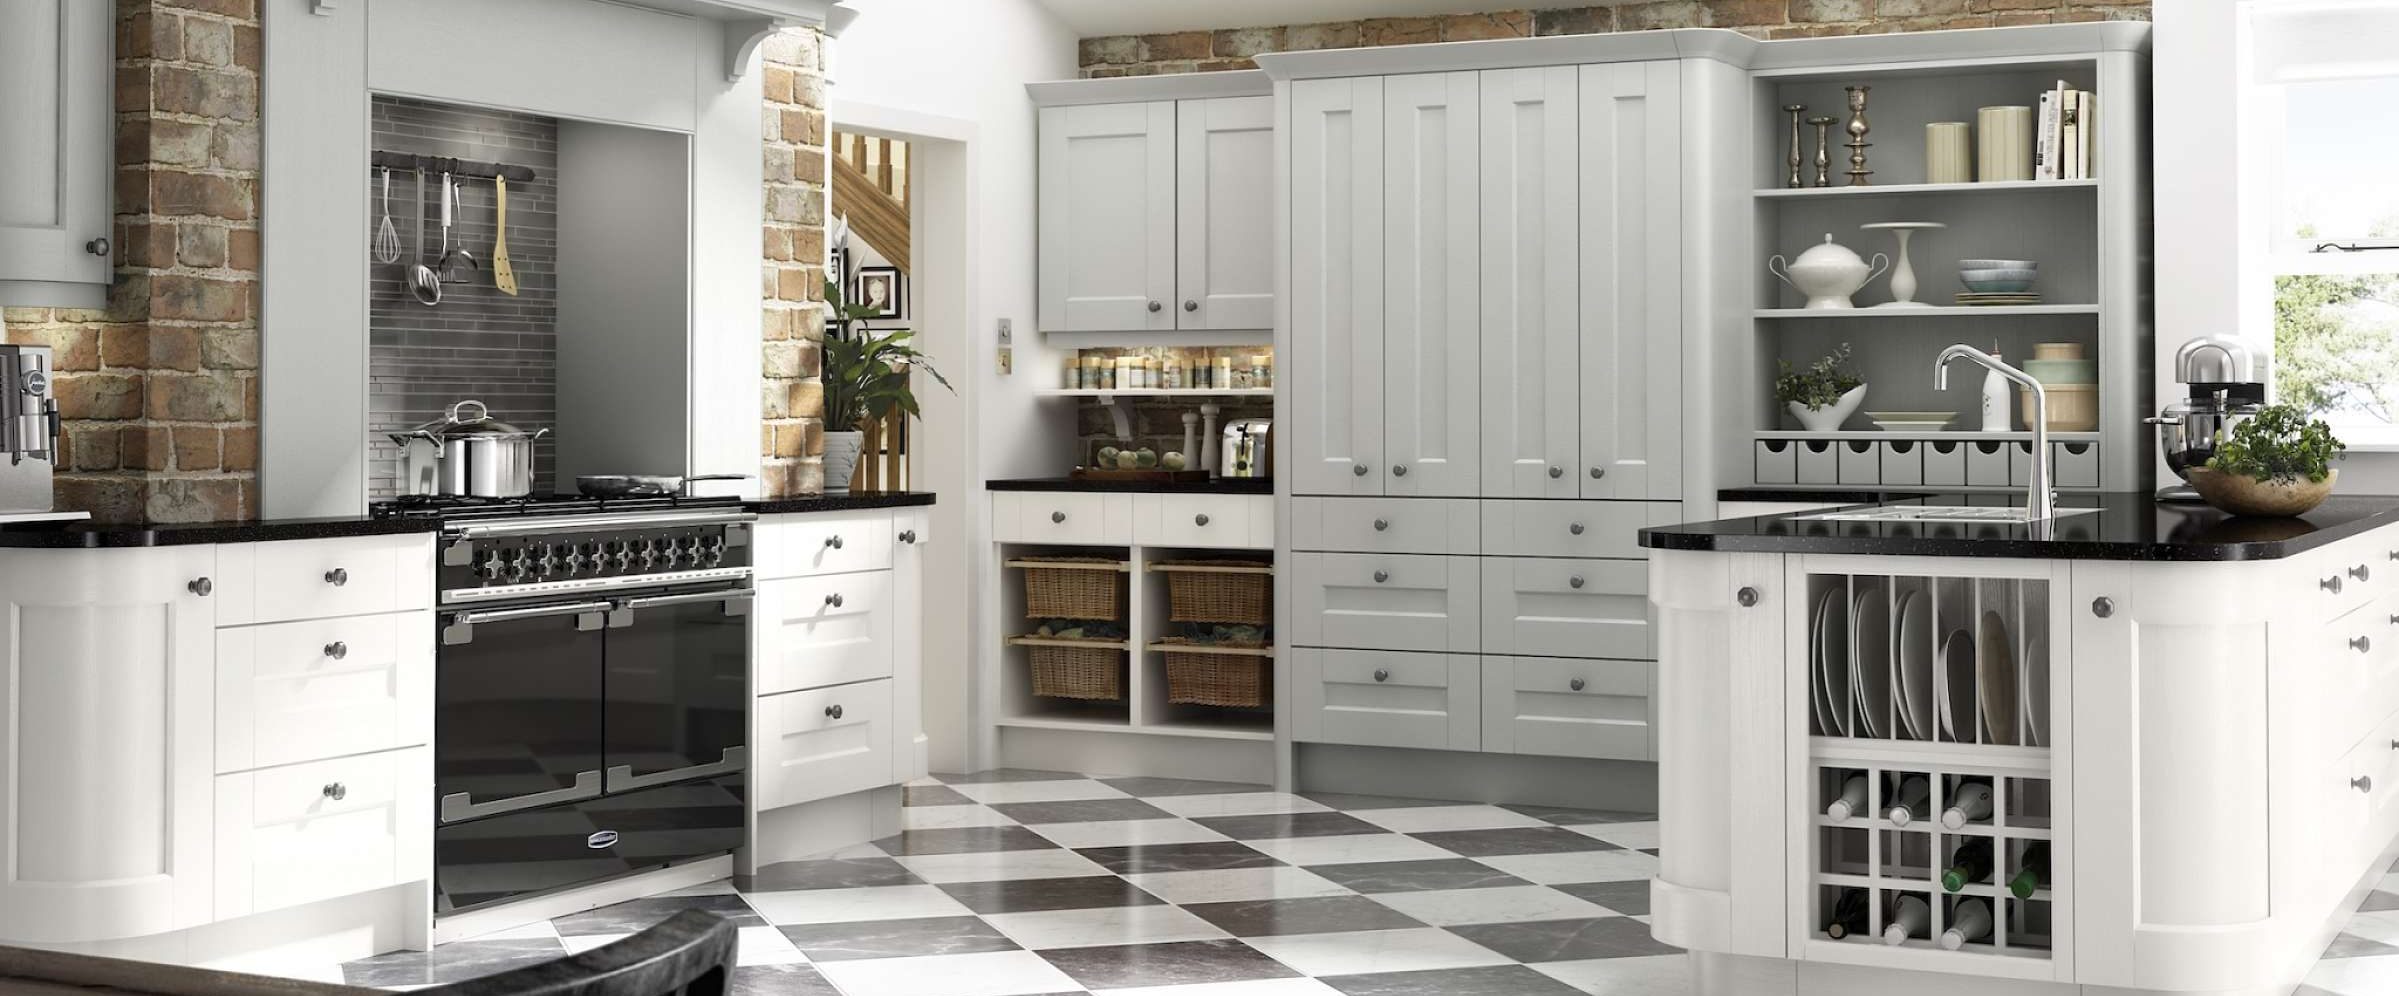 Ashbourne Dove Grey and Chalk White Gallery Kitchen